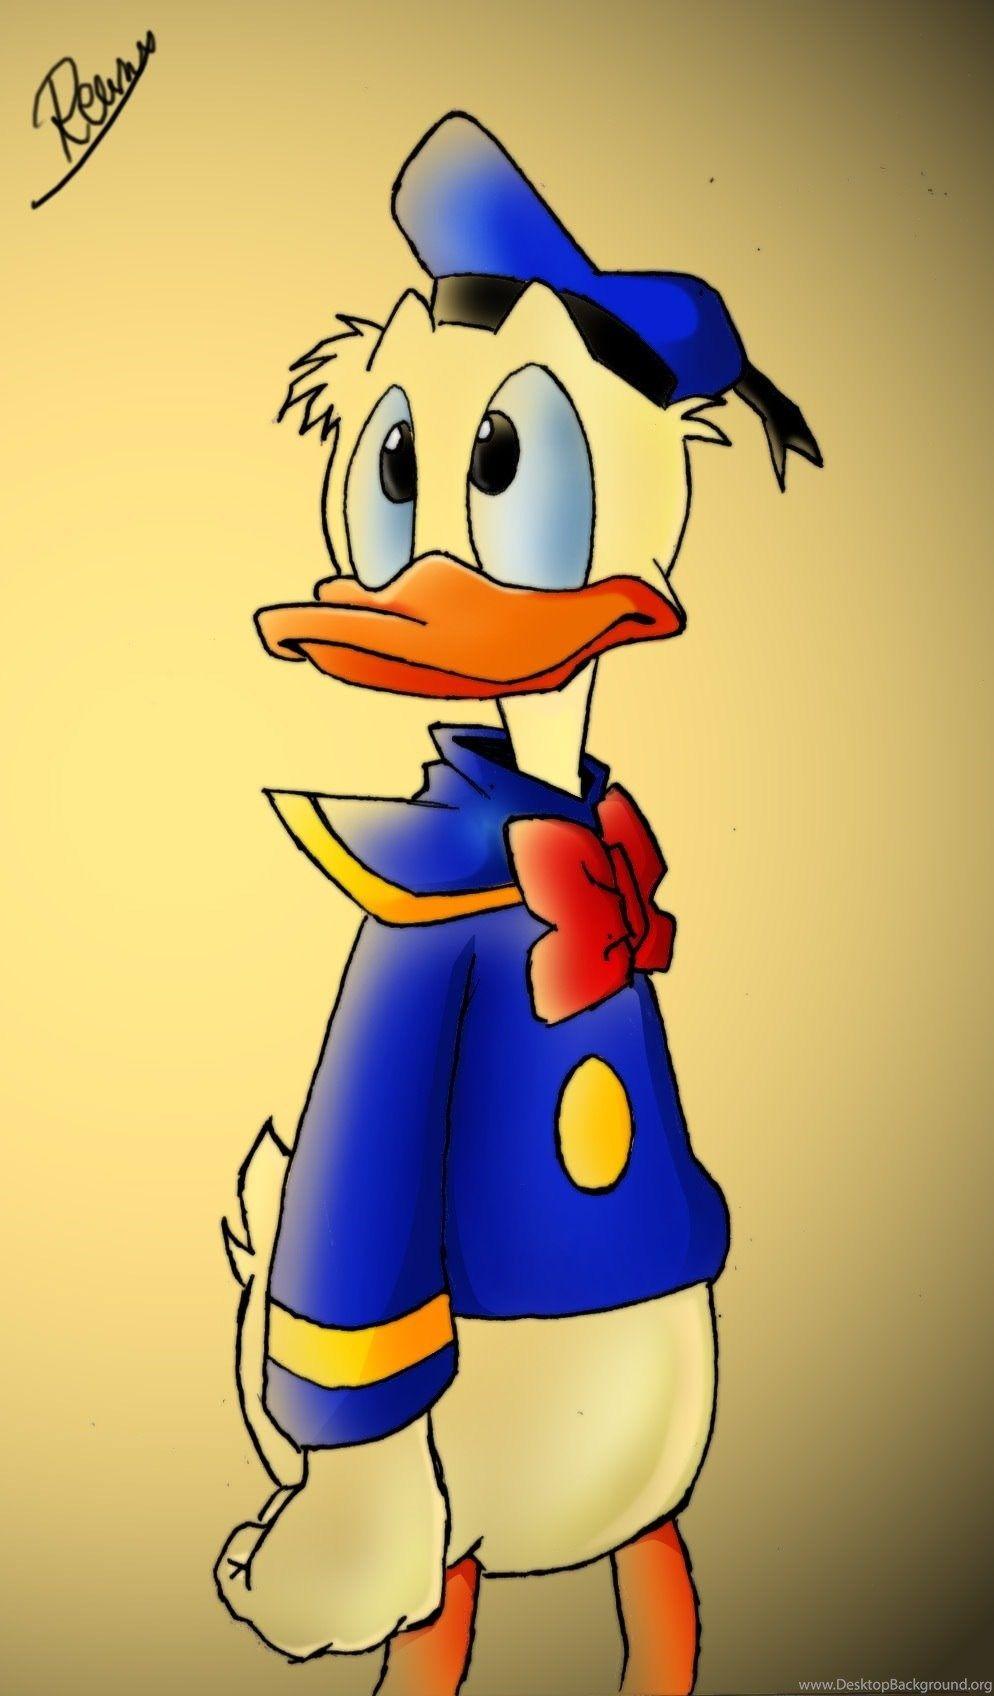 Donald Duck Wallpaper Iphone 7 Plus